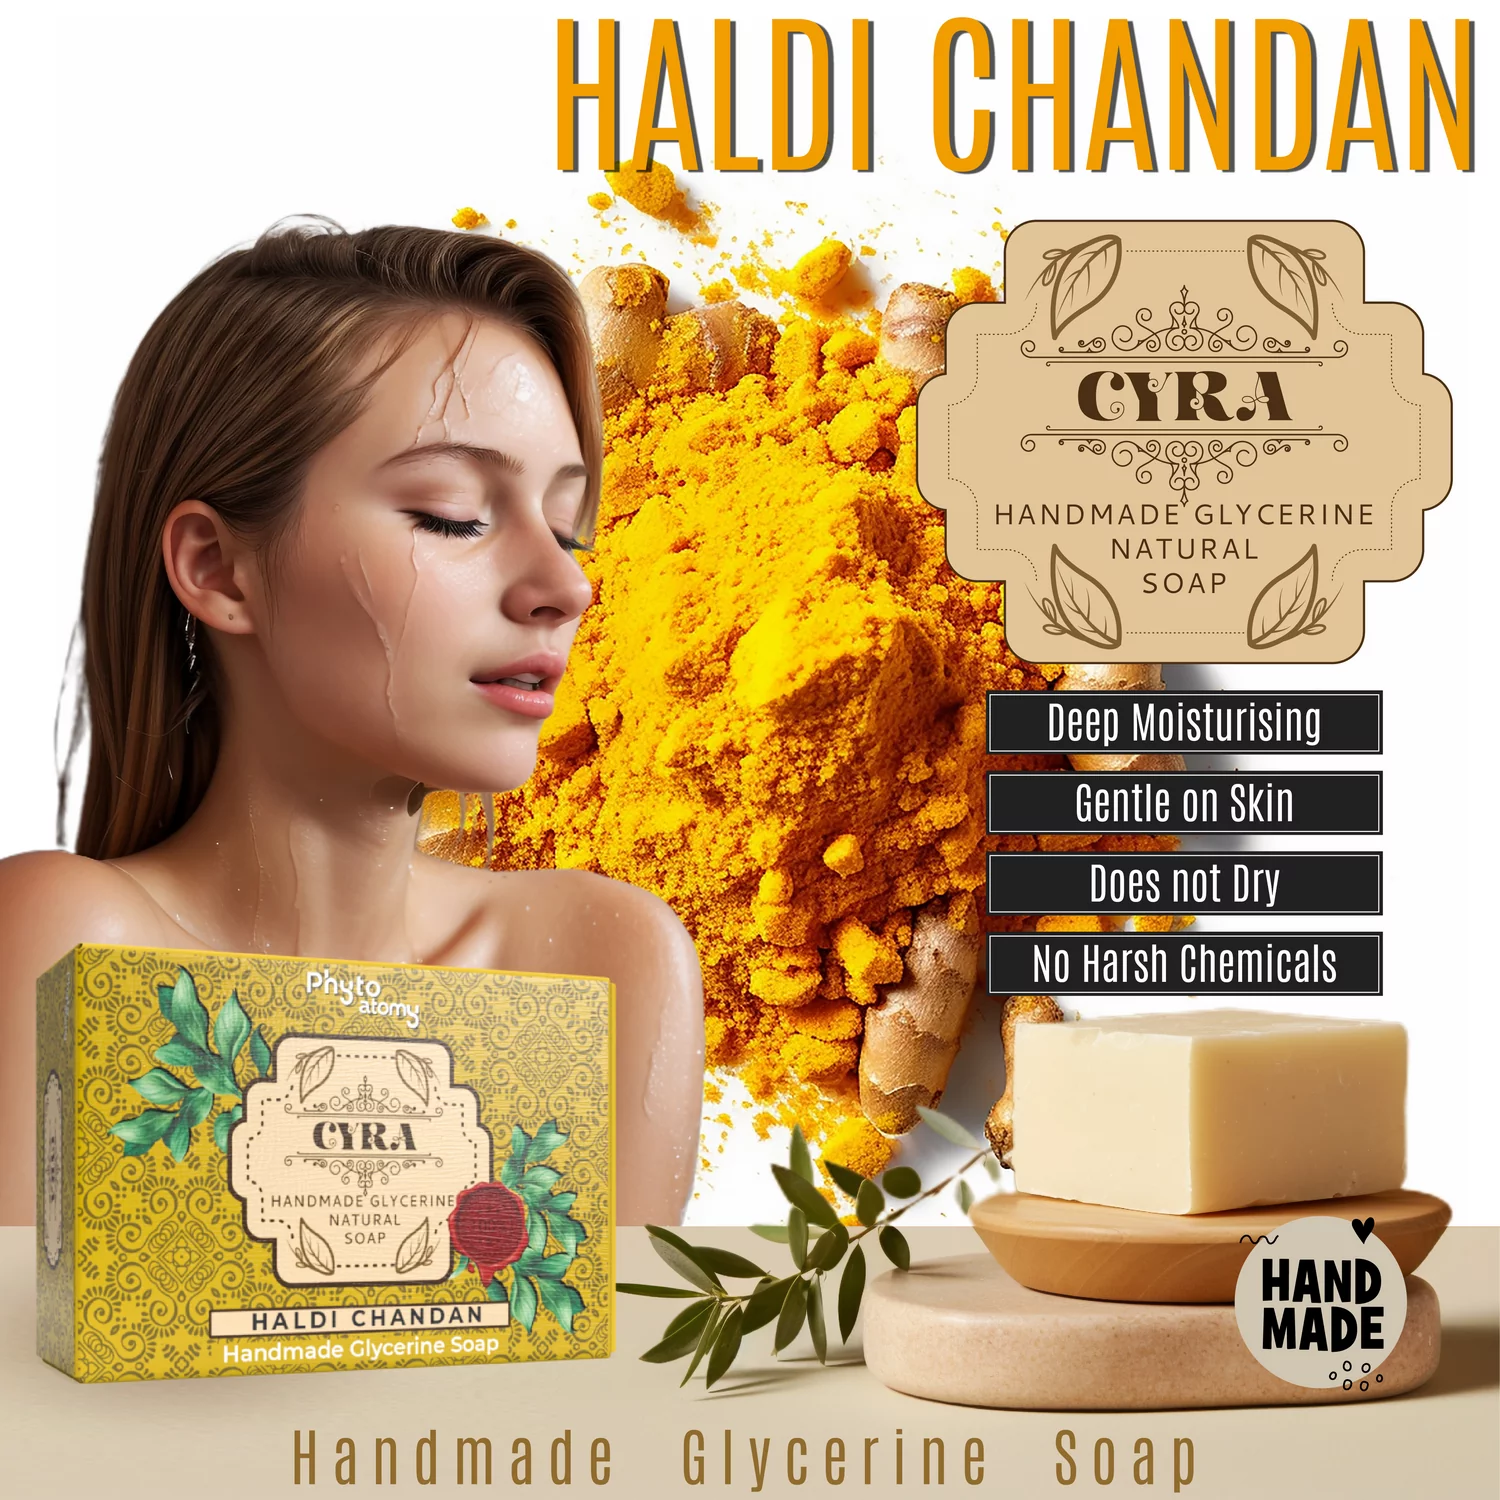 Haldi Chandan Glycerine Soap (100g)